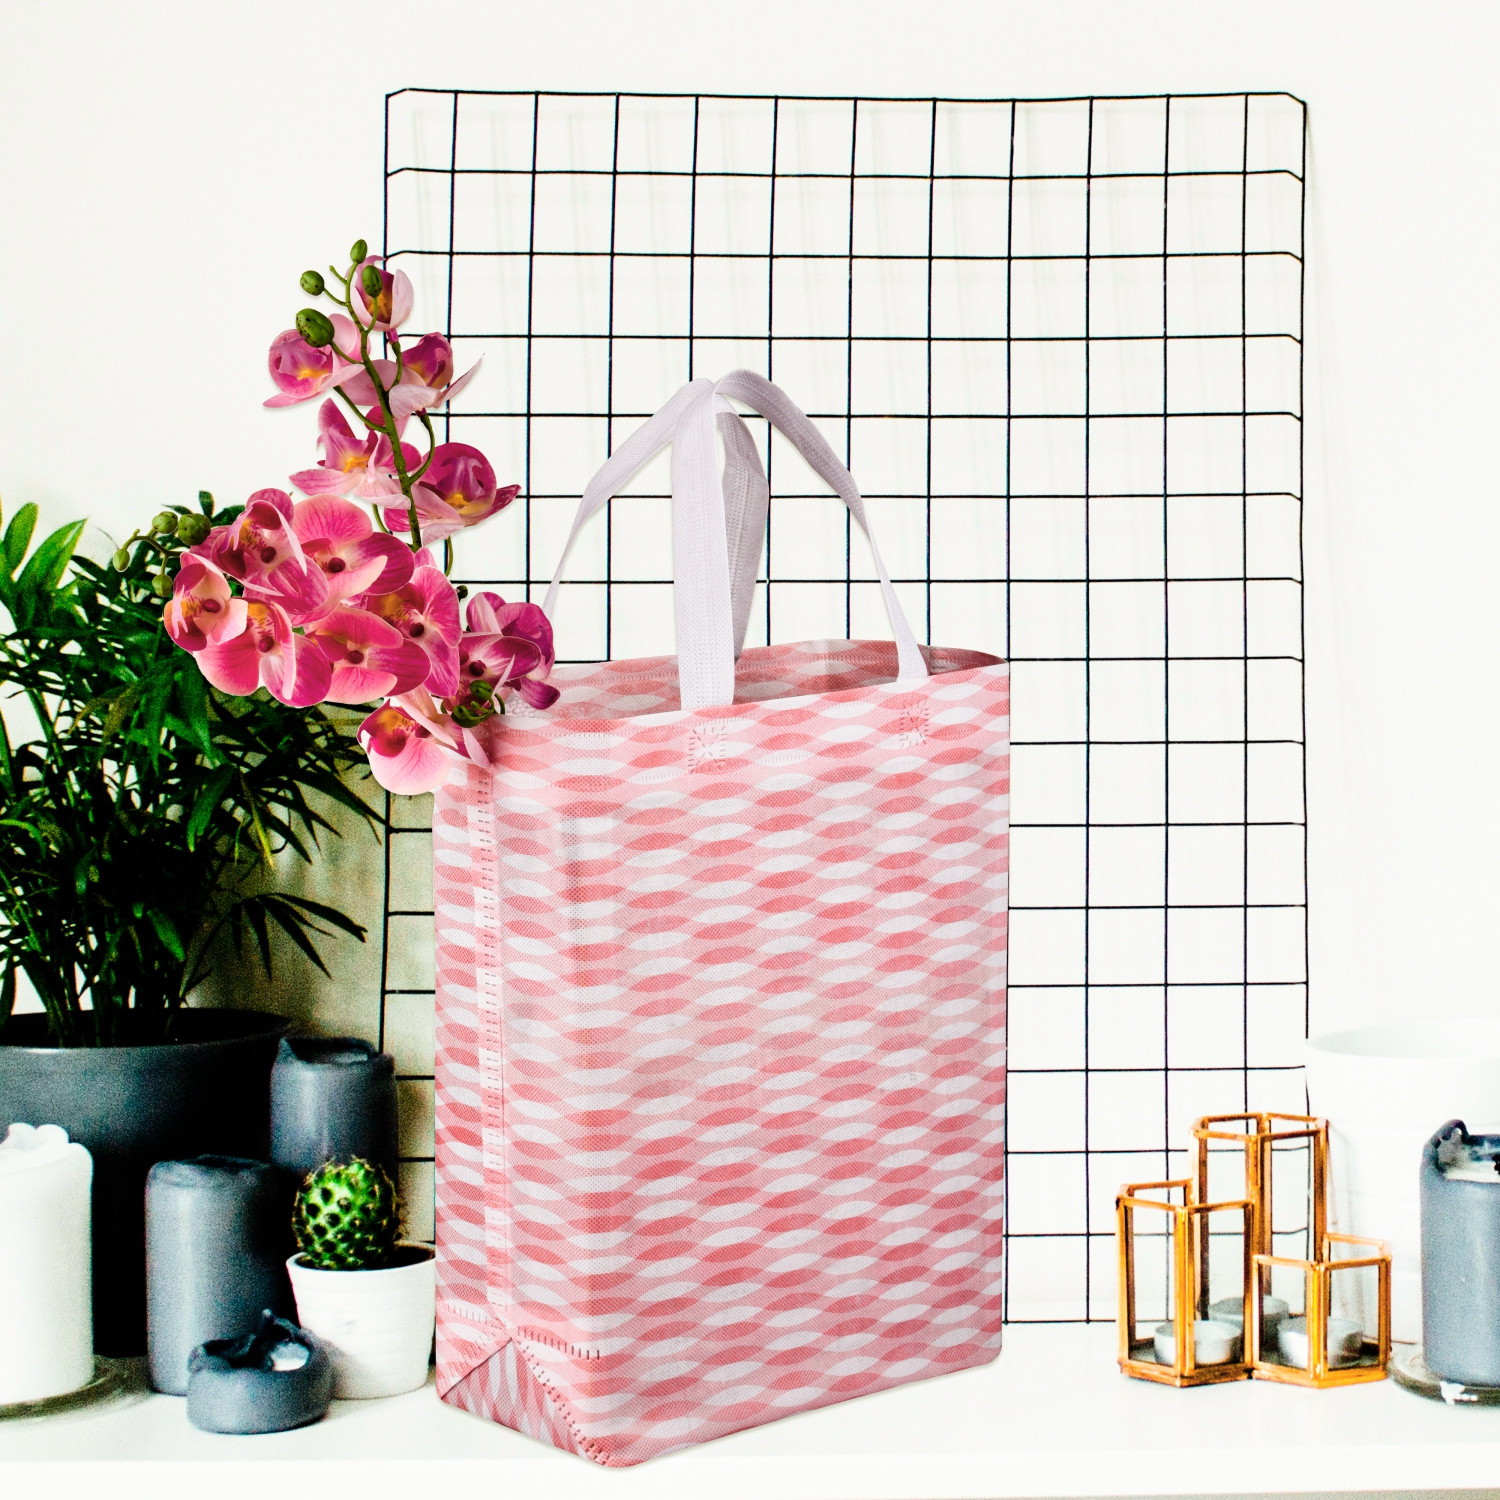 Kuber Industries Shopping Handbag | Grocery Handbag | Shopping Bag | Grocery Shopping Bag | Reusable Shopping Bags | Vegetable Bag | Zig-Zag Carry Bag |Pink